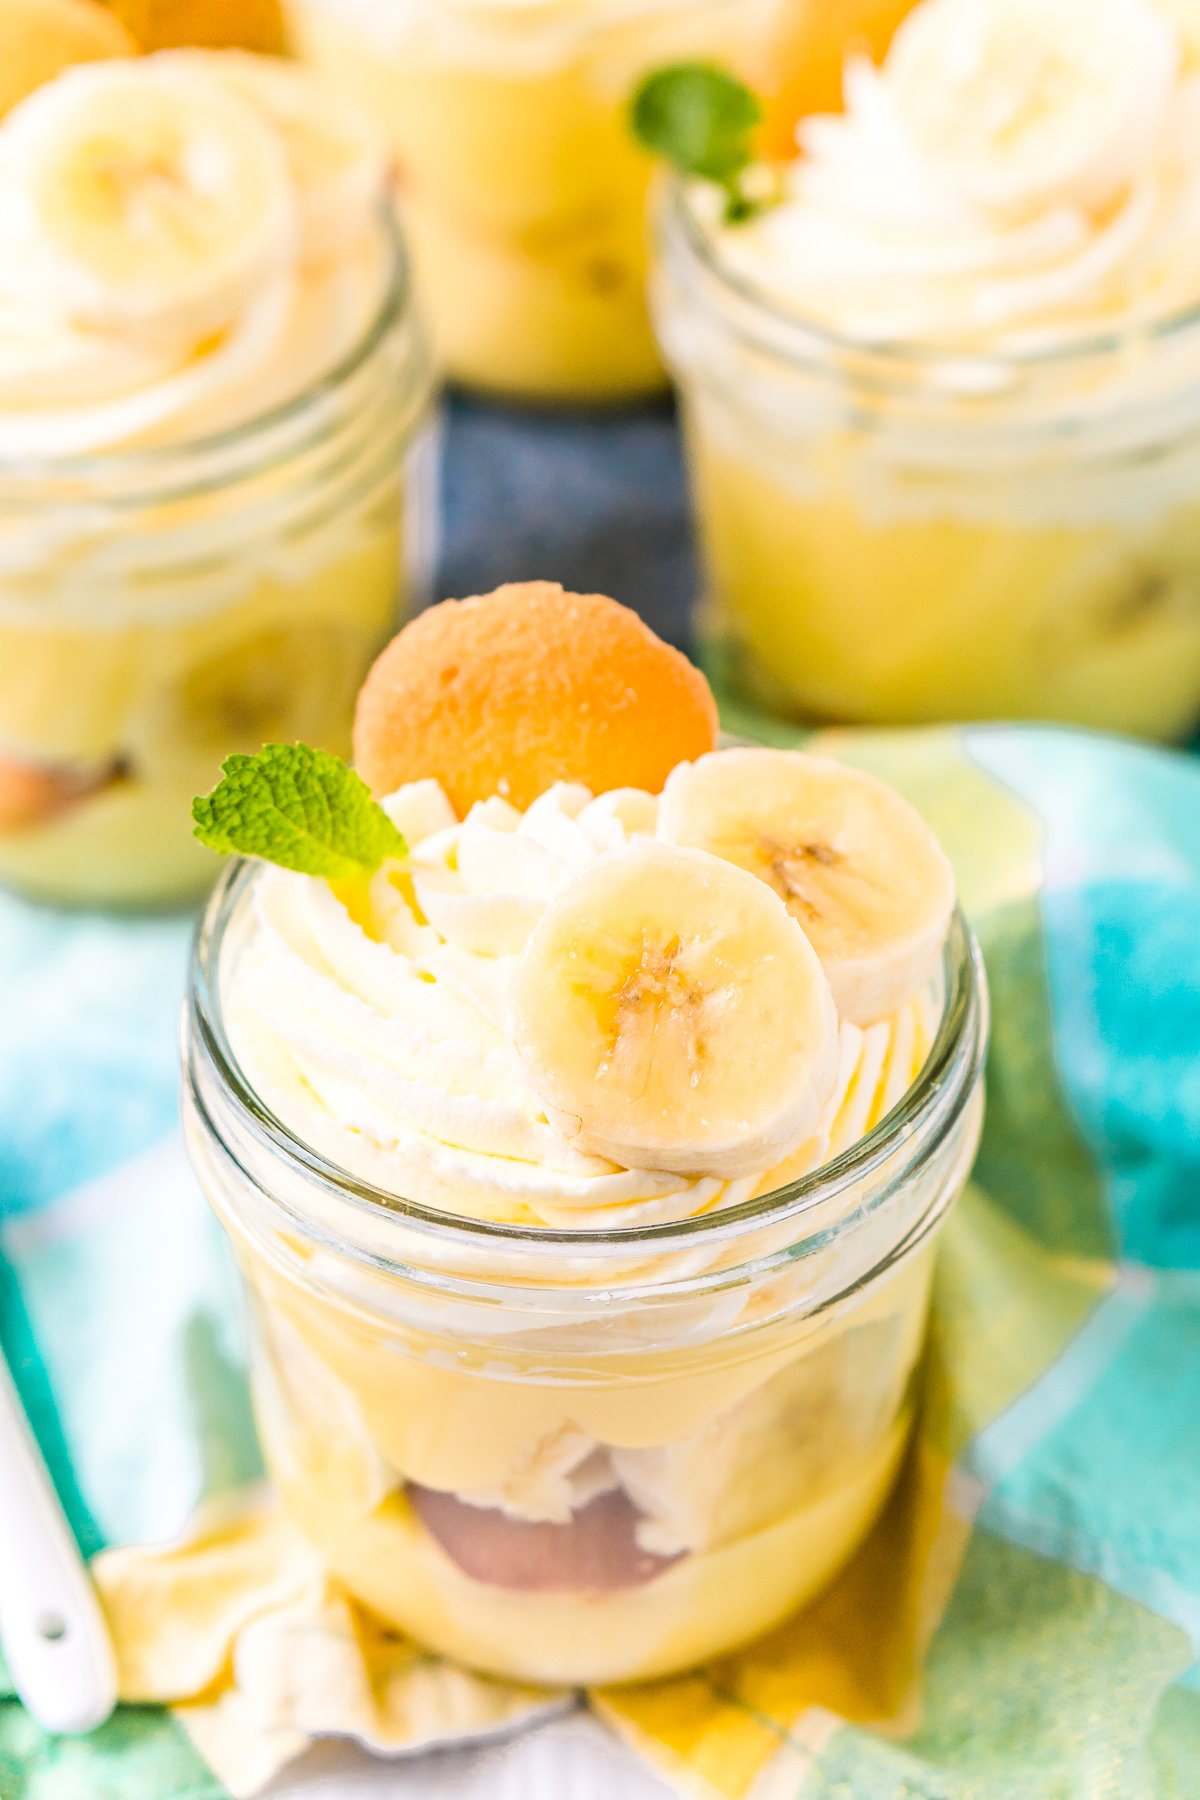 Mini mason jars filled with banana pudding dessert.